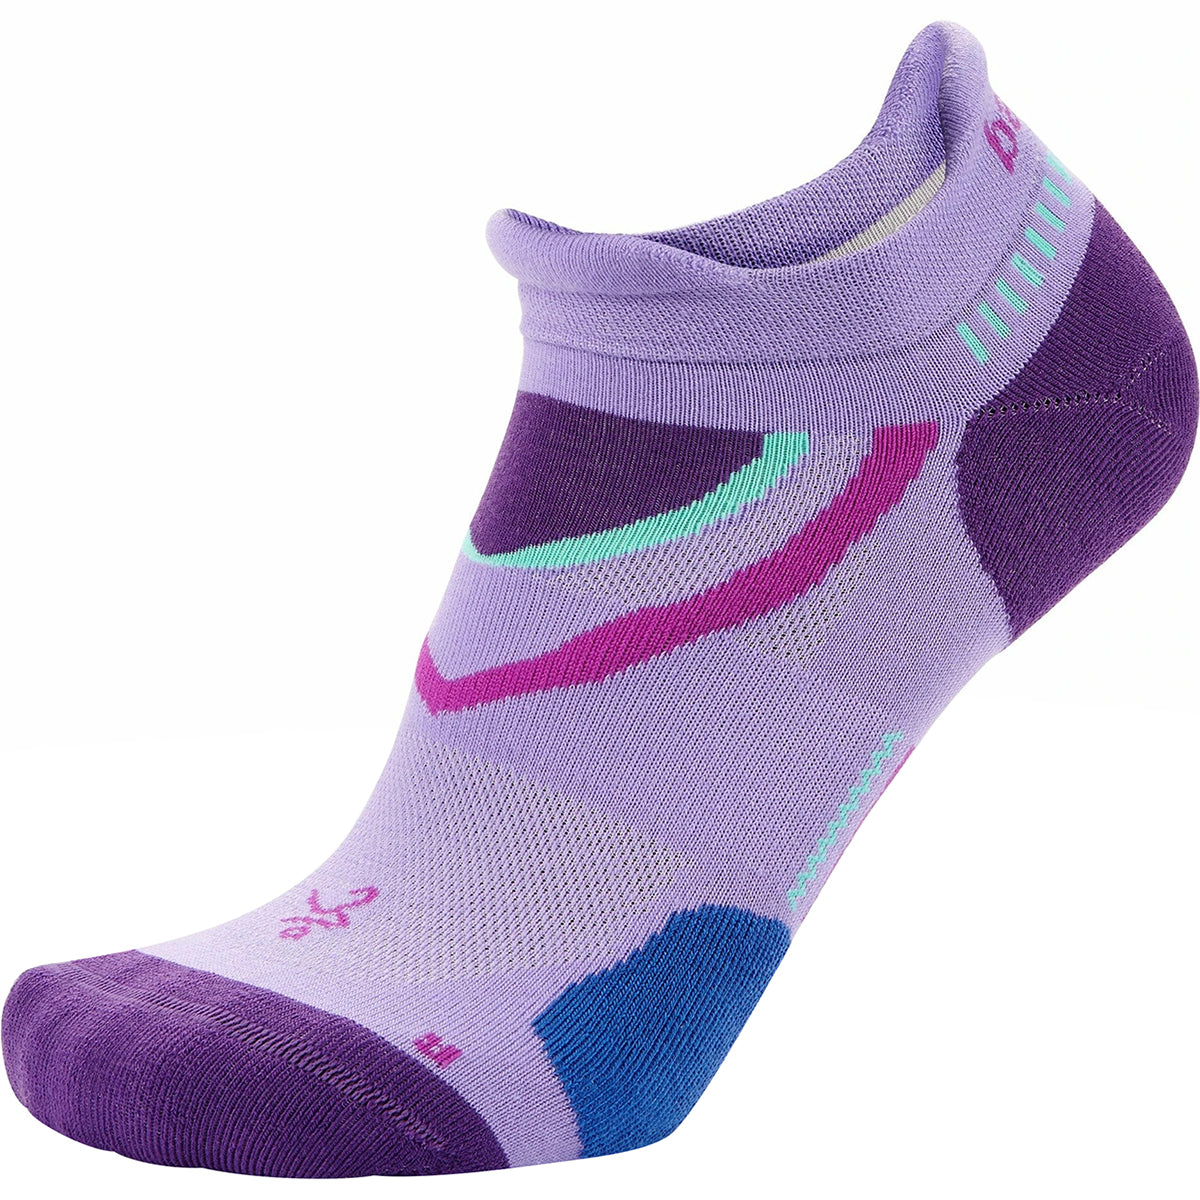 Balega Ultra Glide No Show Running Socks - Lavender/Charged Purple Balega